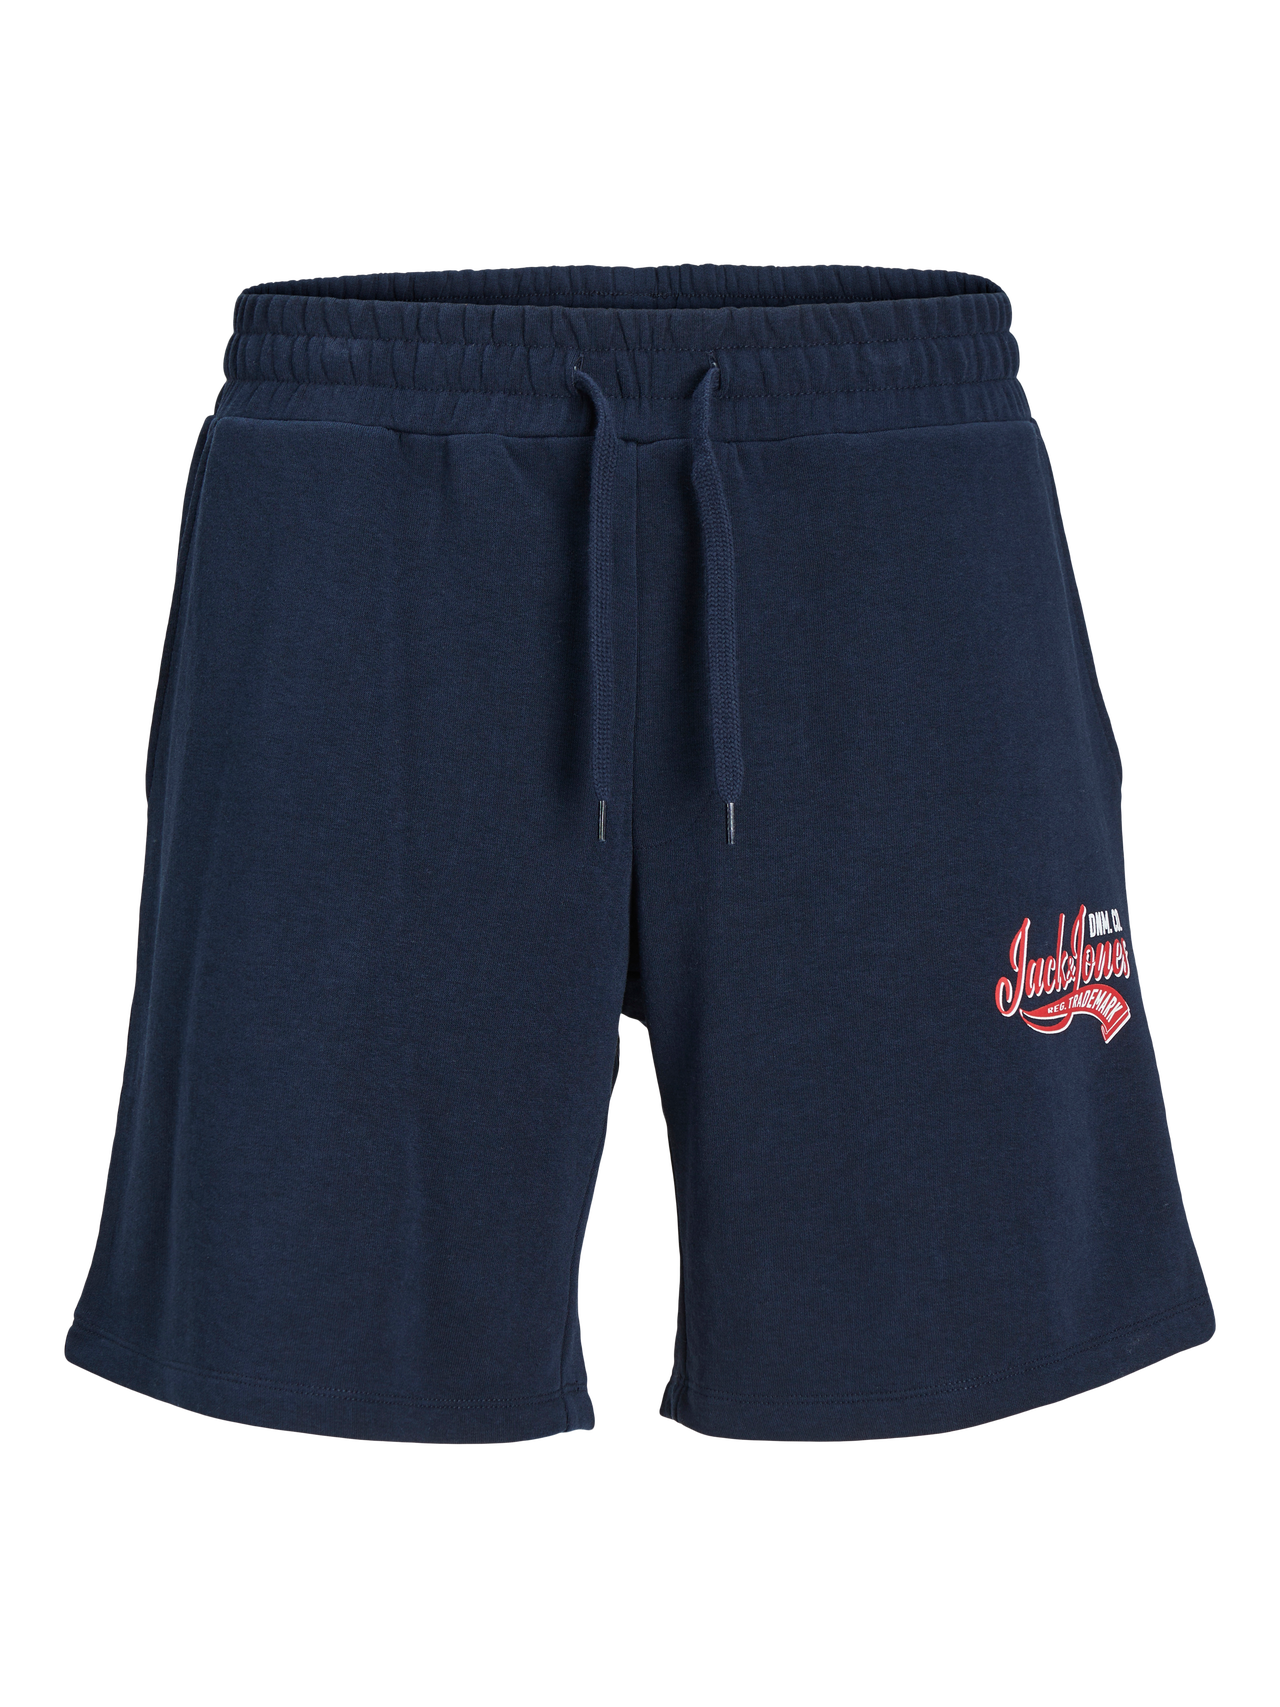 Jack & Jones Loose Fit Sweat-Shorts Mini -Navy Blazer - 12257300